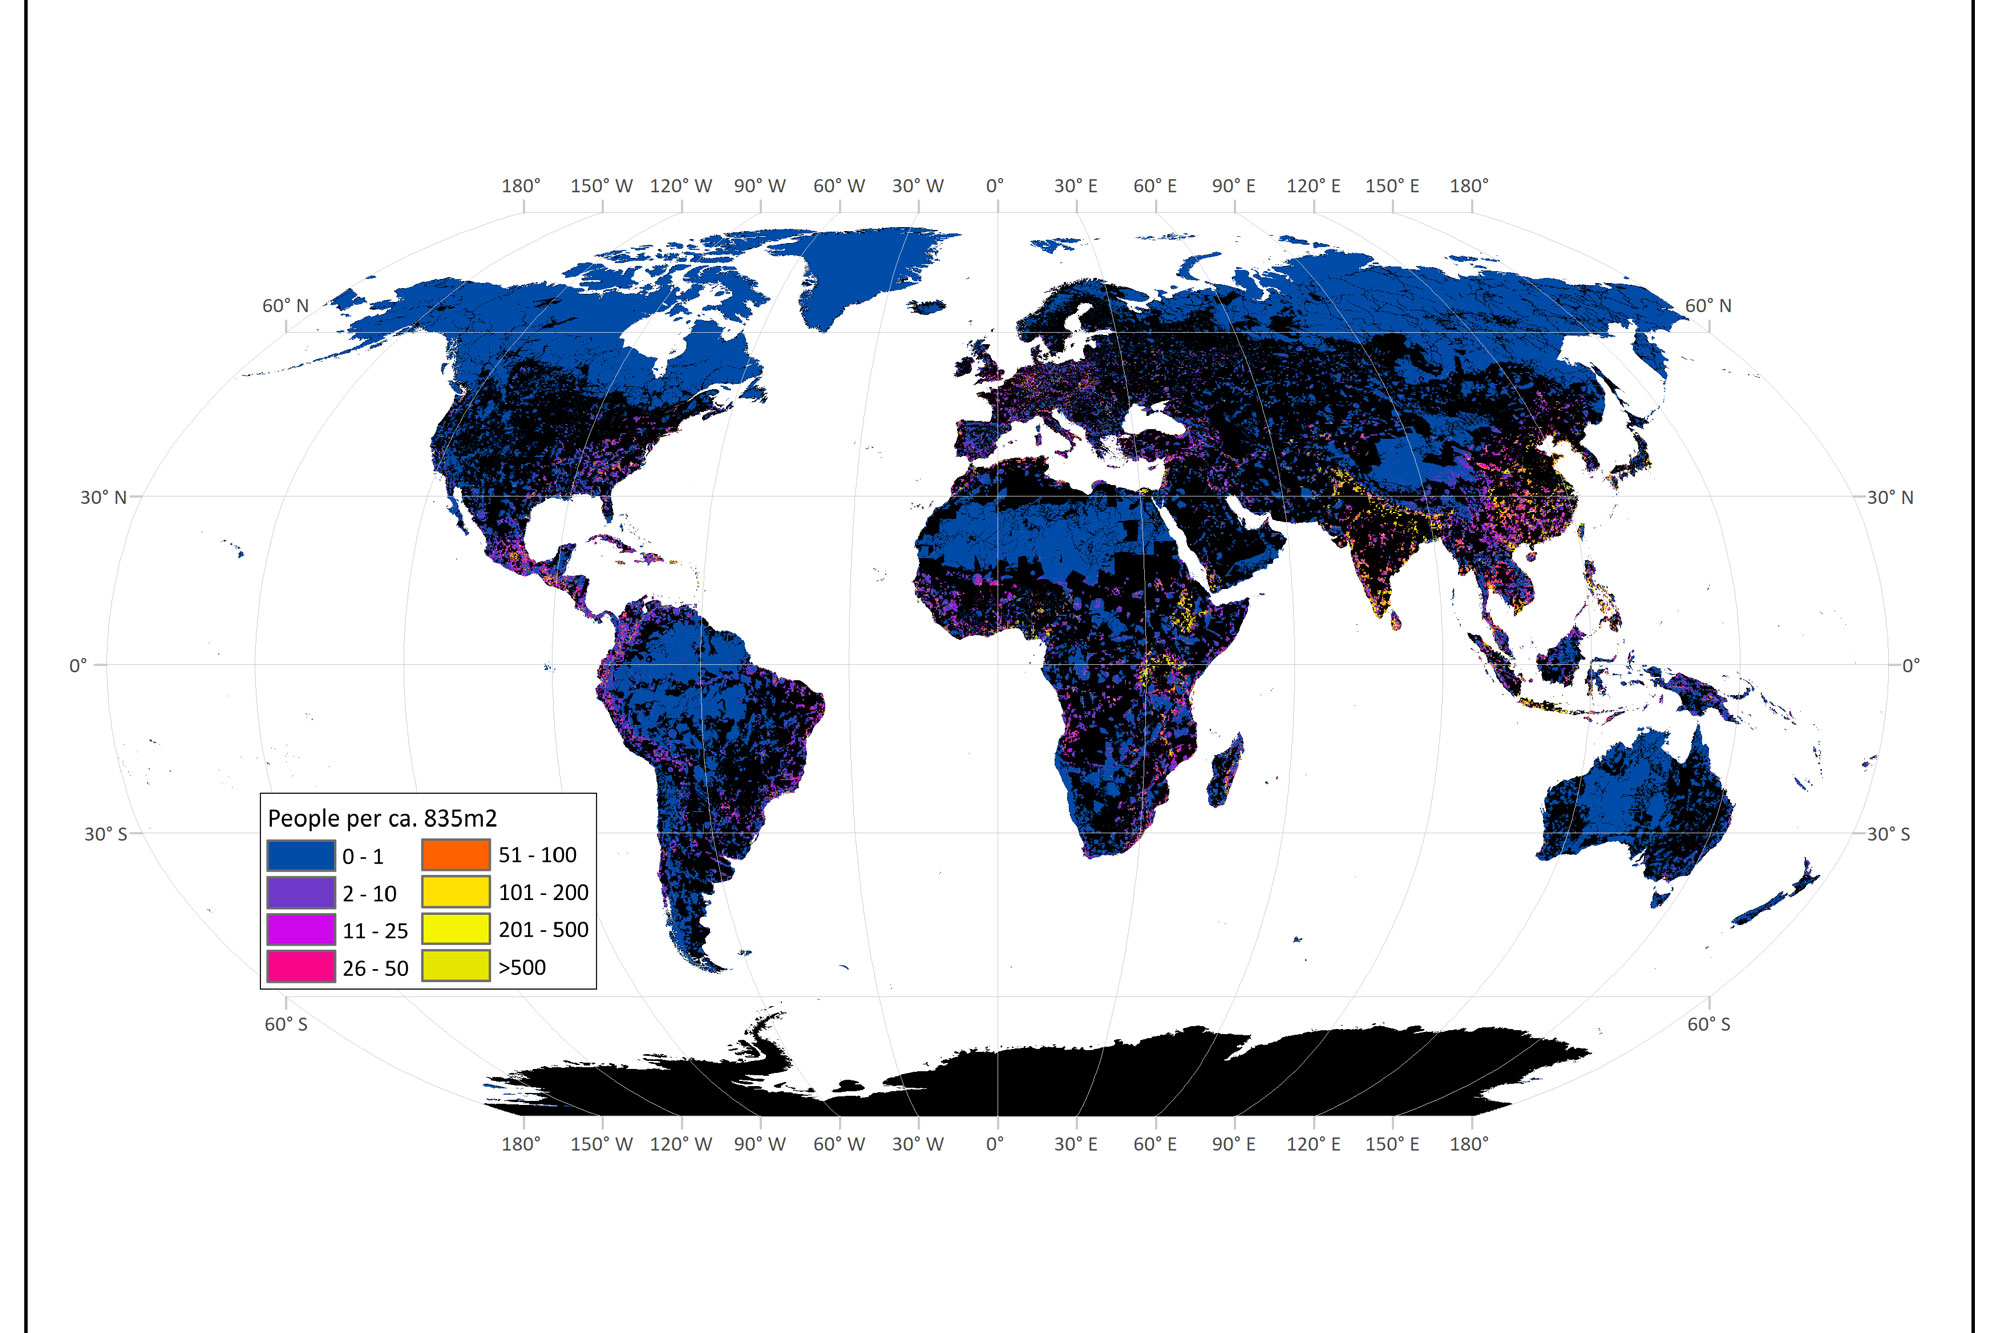 World map showing population per ca. 832m2